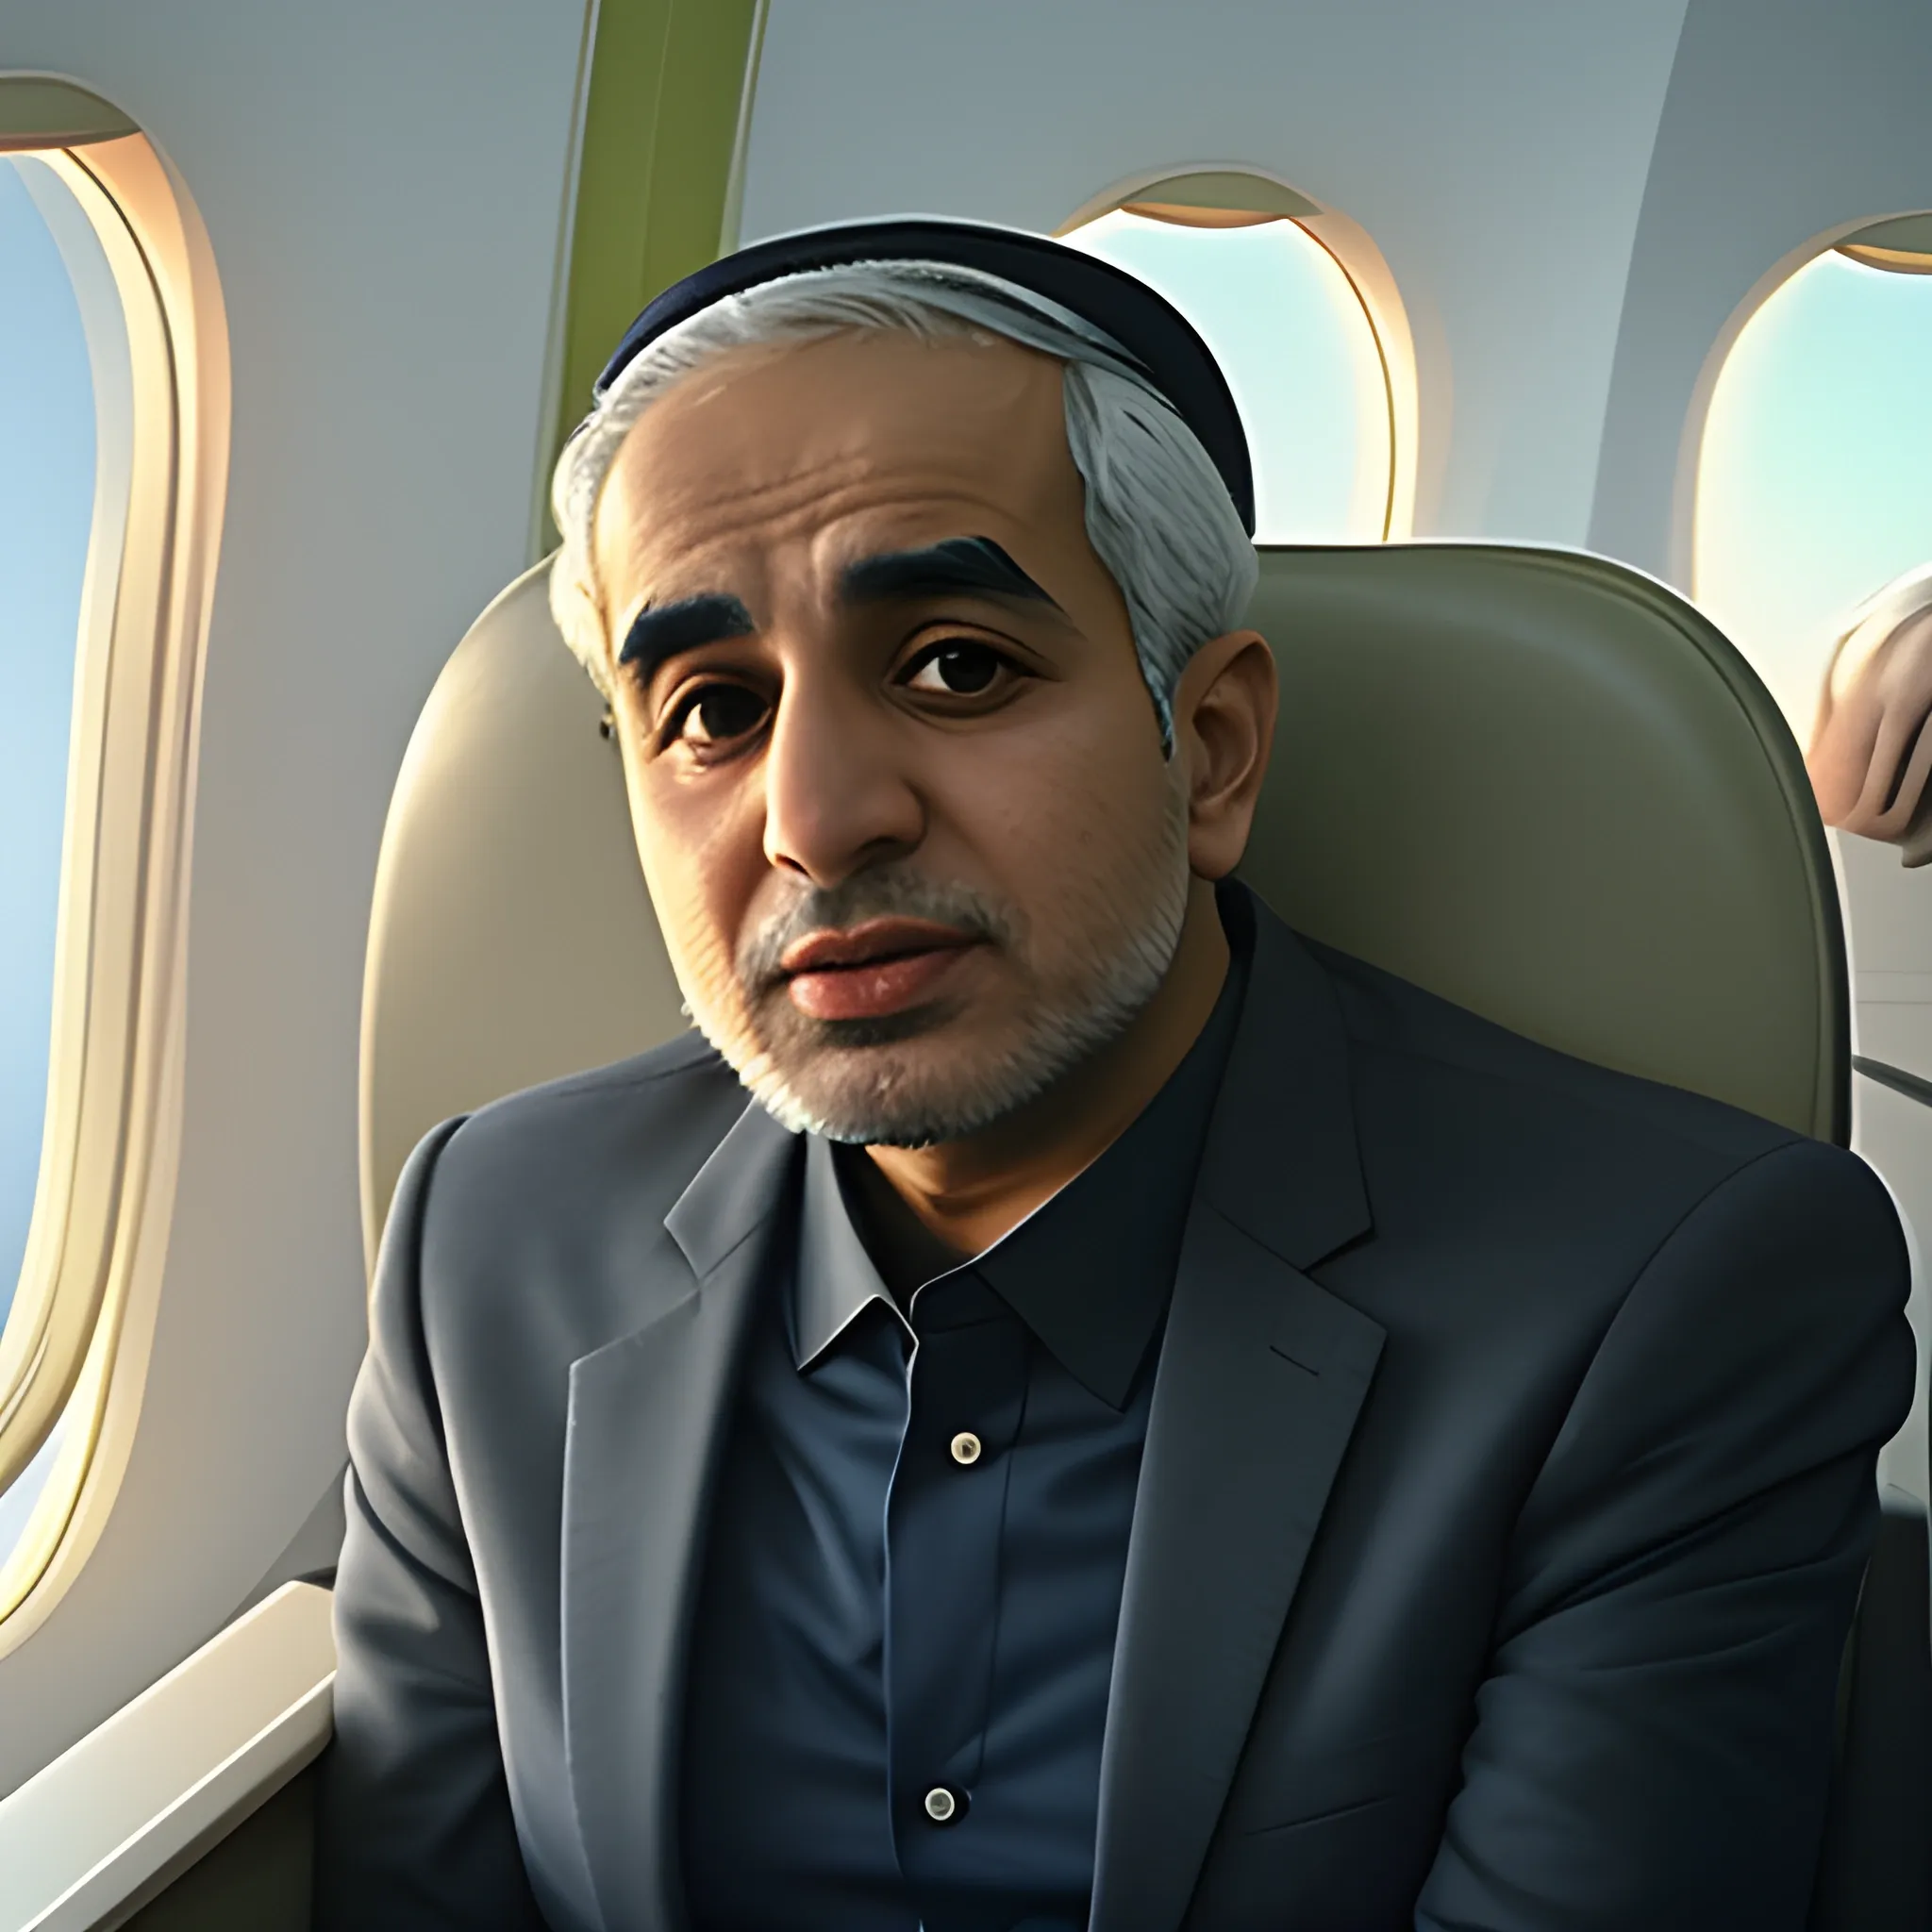  mohammad faridzadeh in airplane
